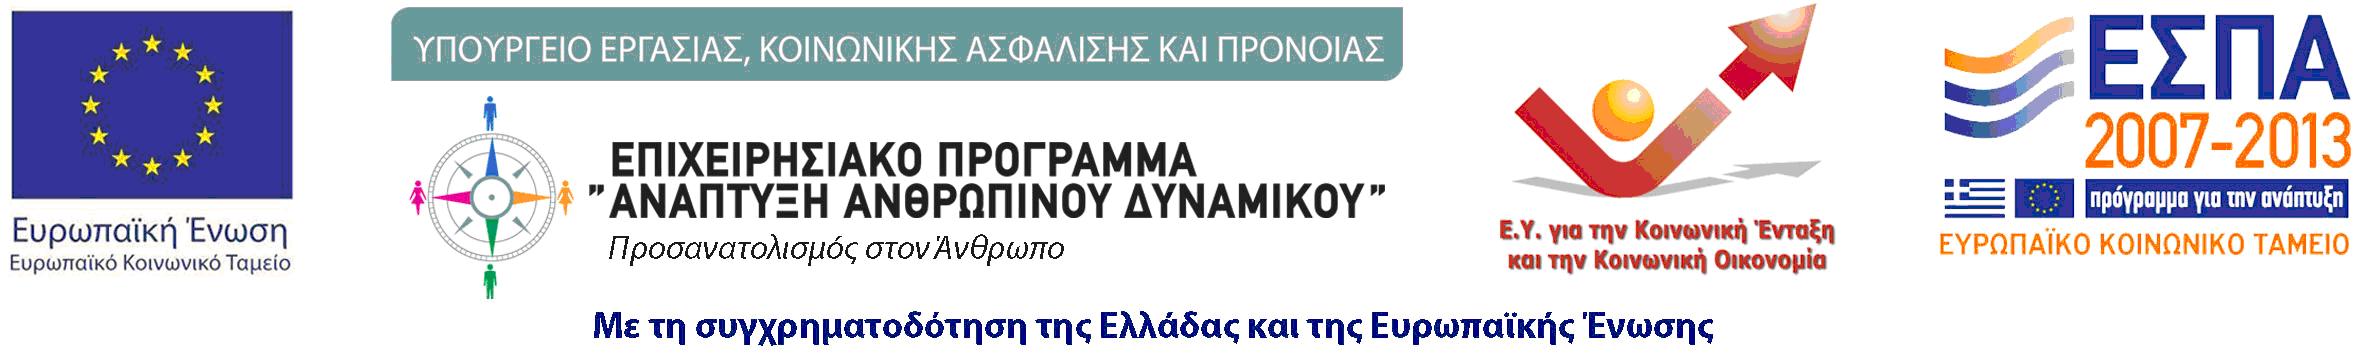 http://www.anko-eunet.gr/uploads/assets//Logos/TOPEKO/TOPEKO.JPG